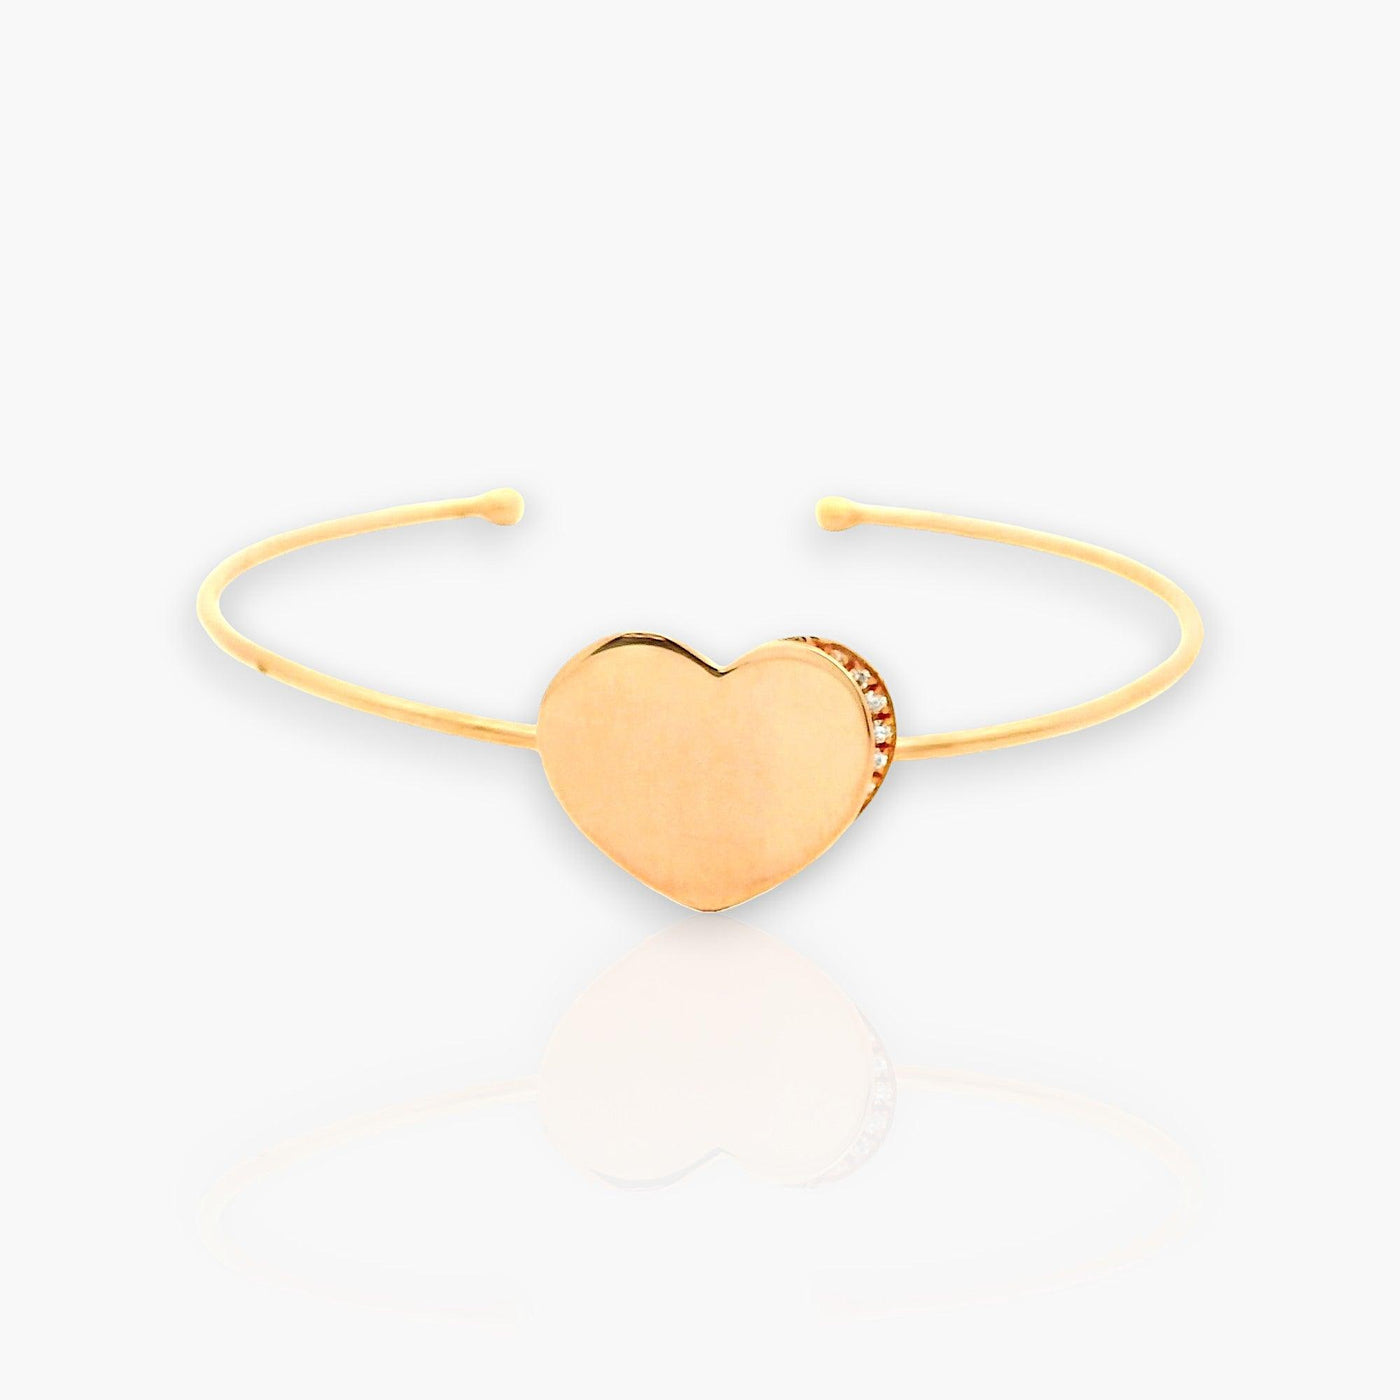 Rose gold bracelet with diamond heart - Moregola Fine Jewelry